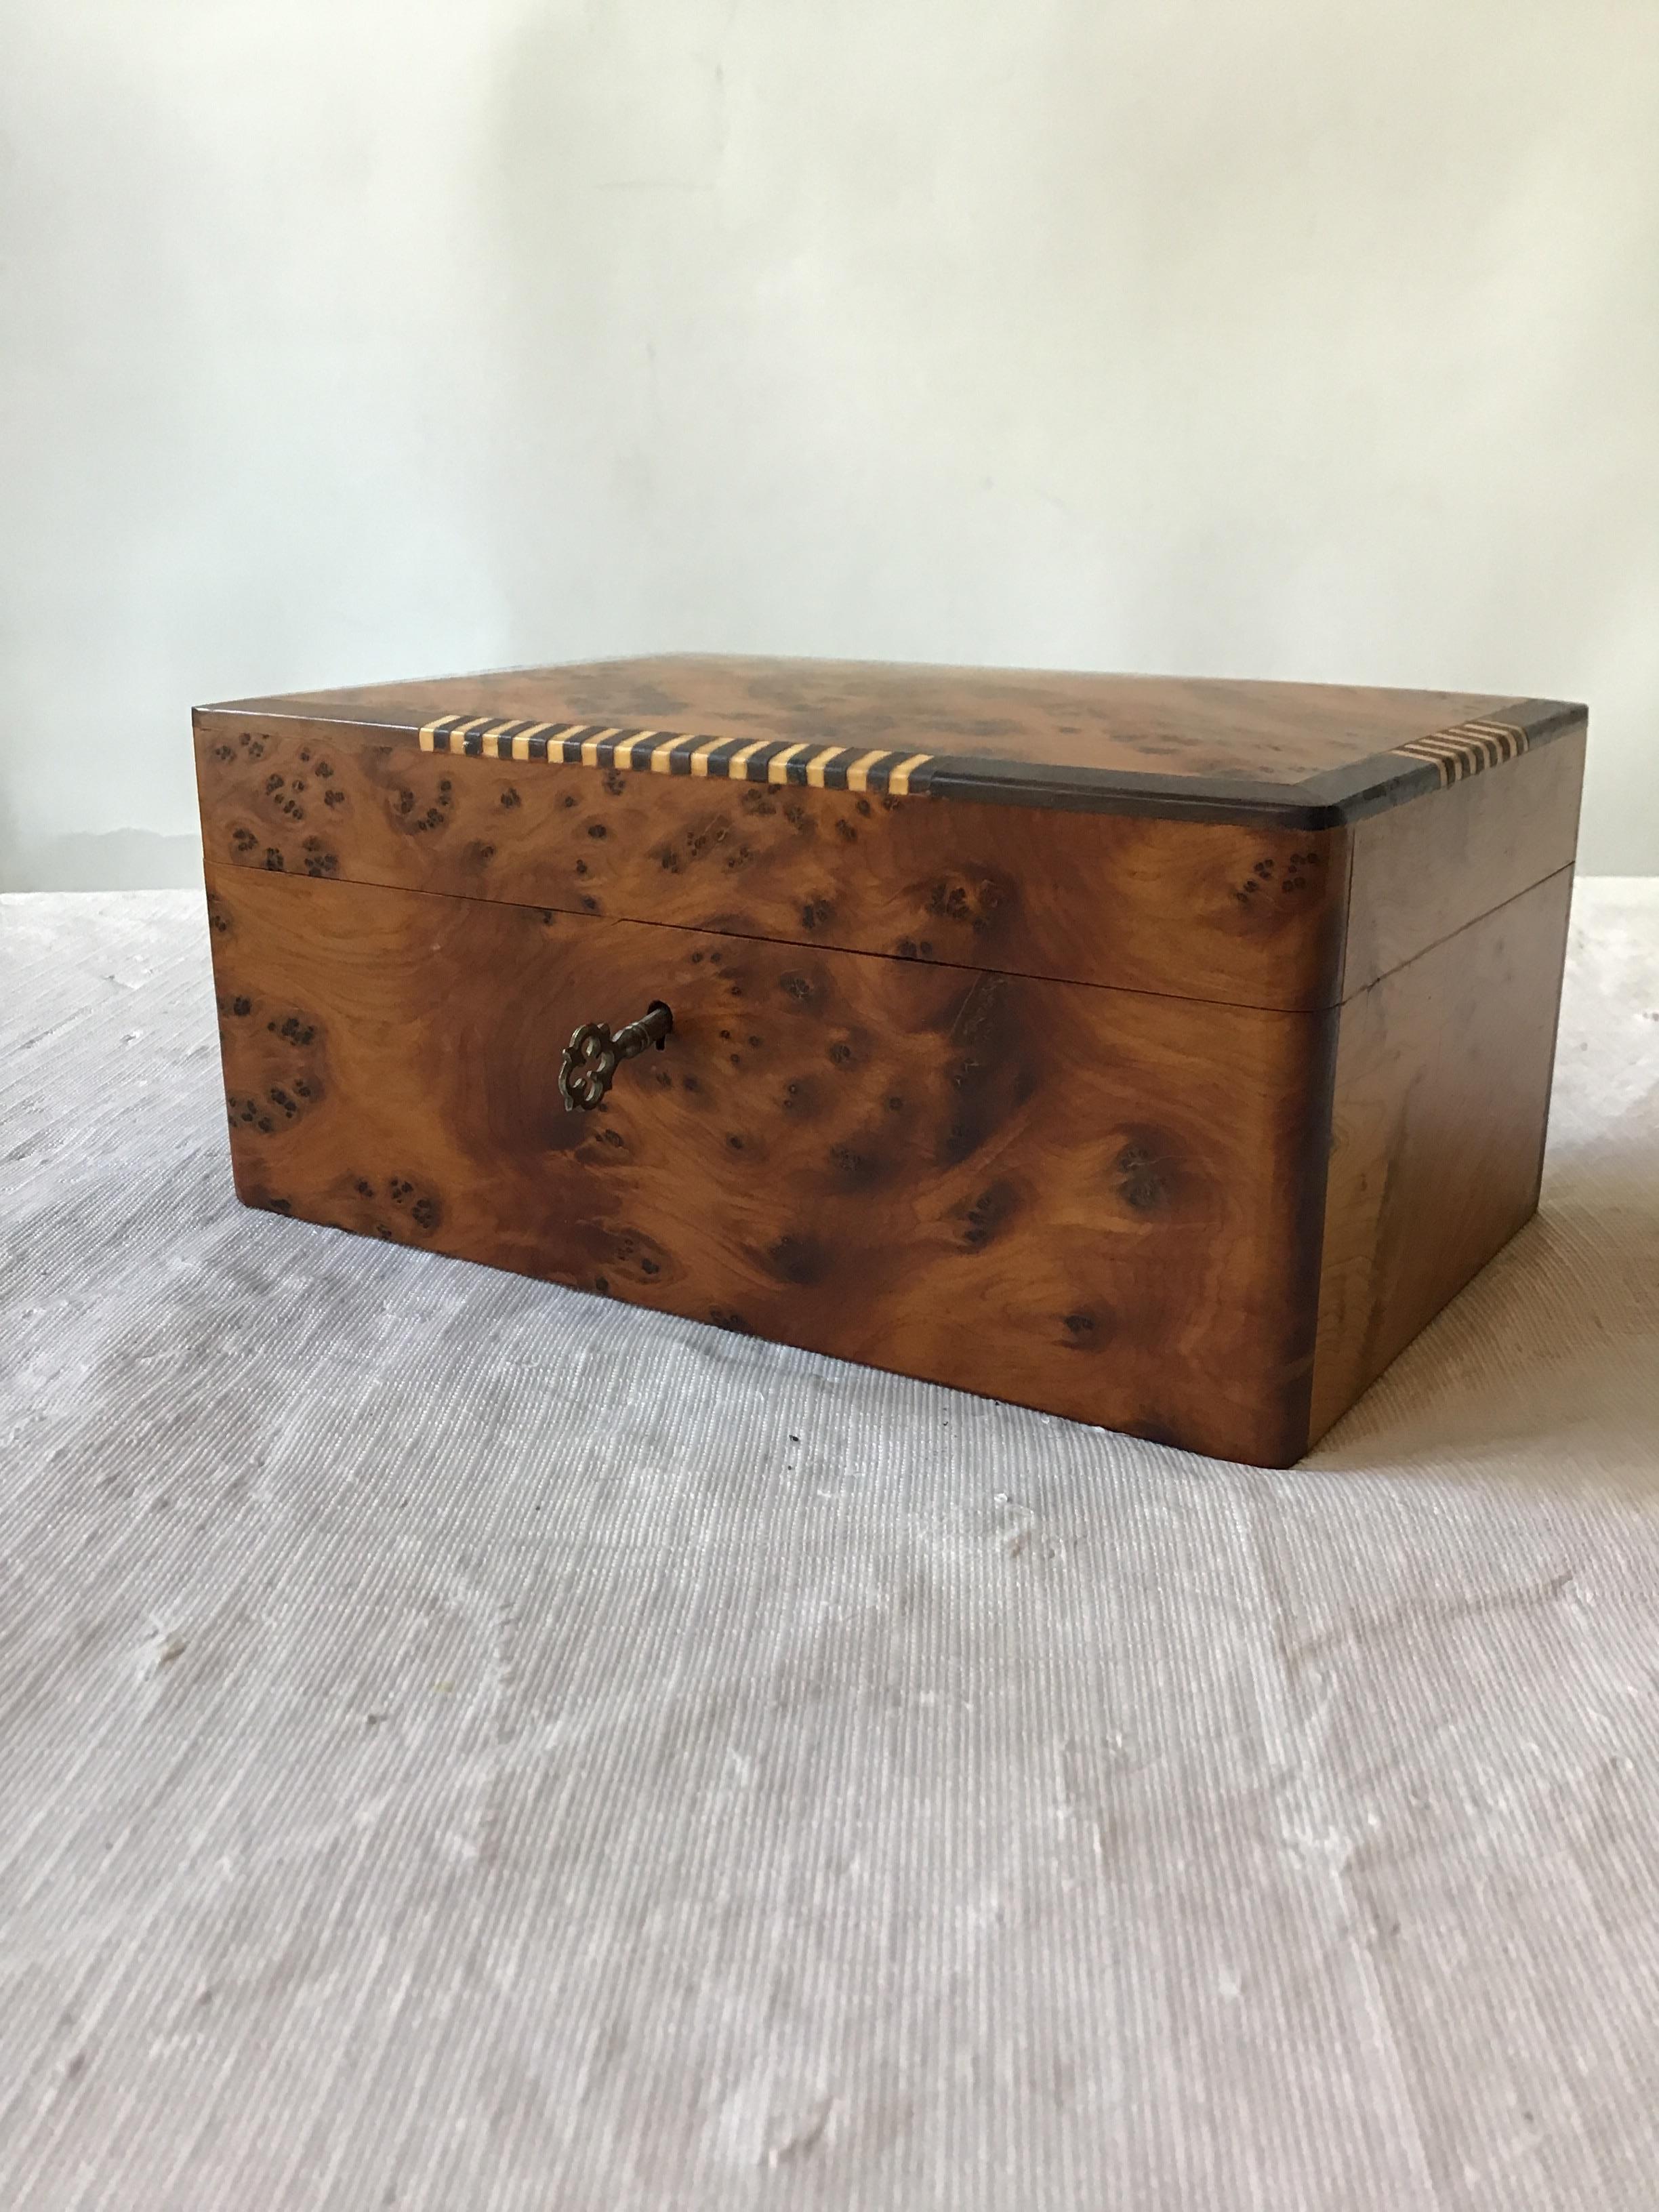 Burl box purchased from Lorin Marsh.